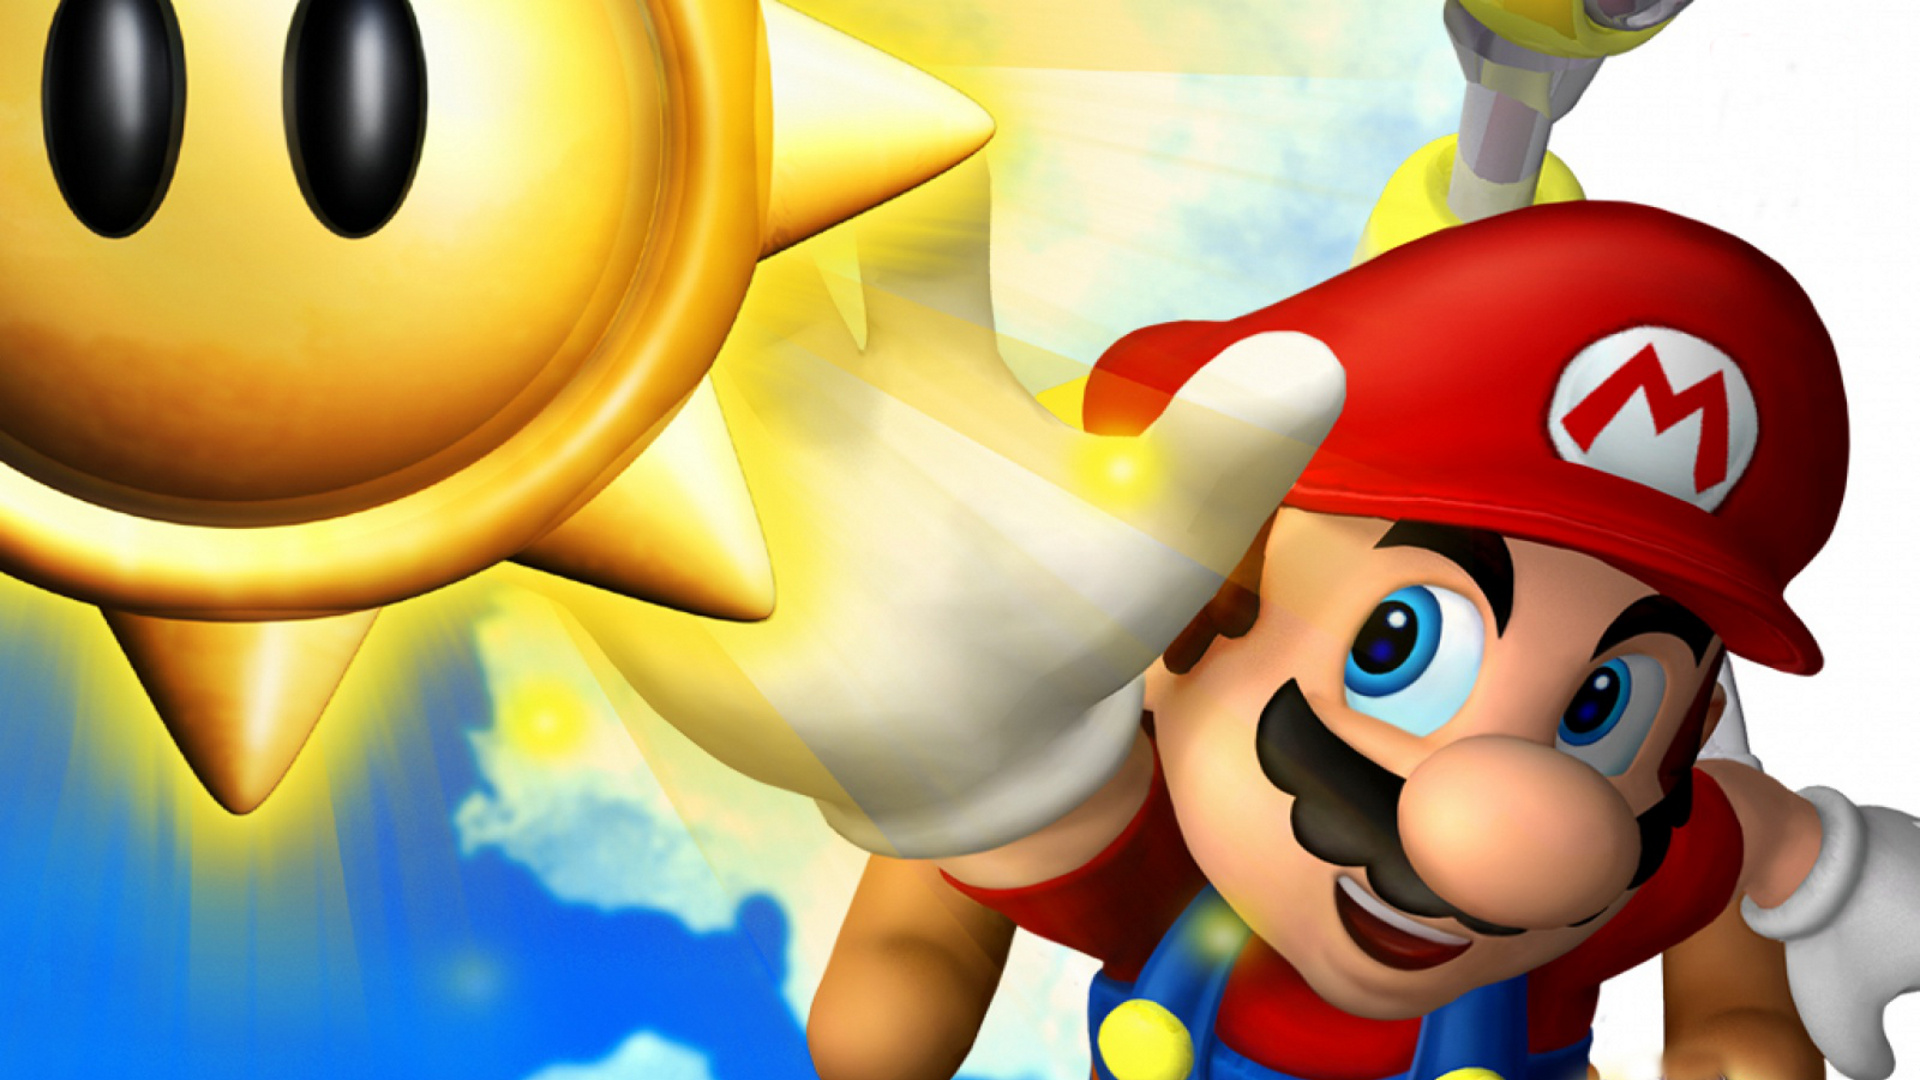 Super Mario Sunshine Wallpaper Hd - Mario Sunshine Super Wallpapers ...